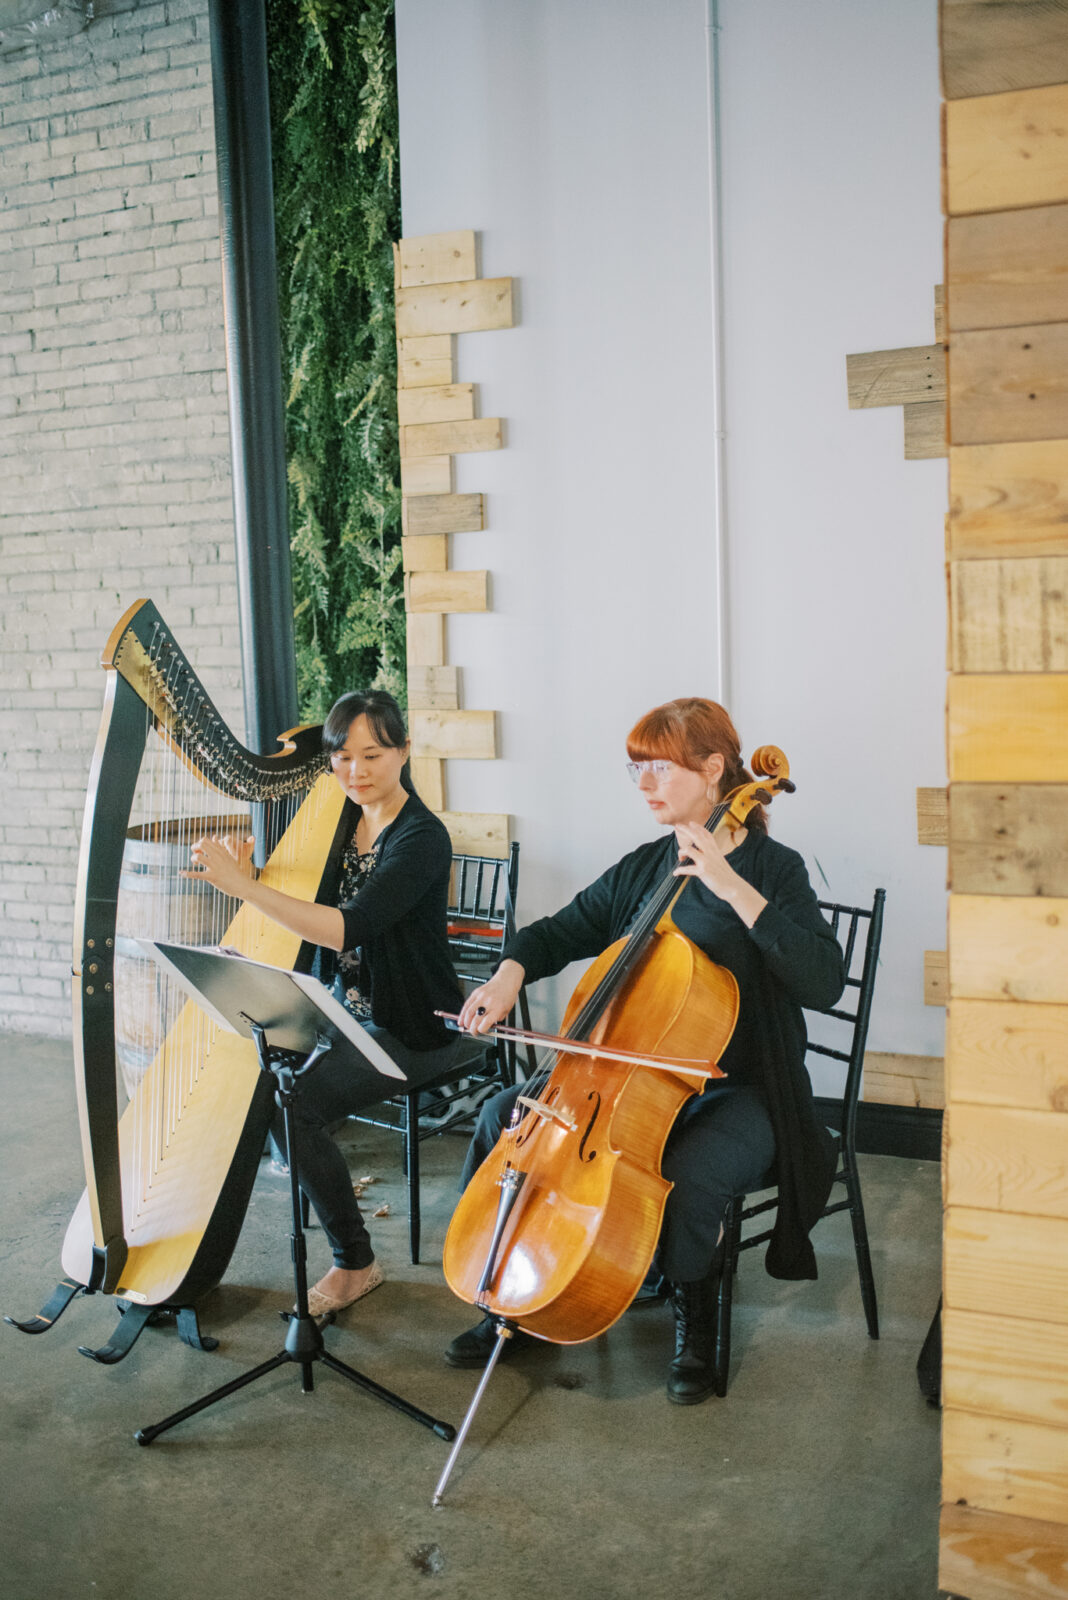 Harp and cello music for indoor modern ceremony, industrial wedding venue with concrete floor in Edmonton, Alberta